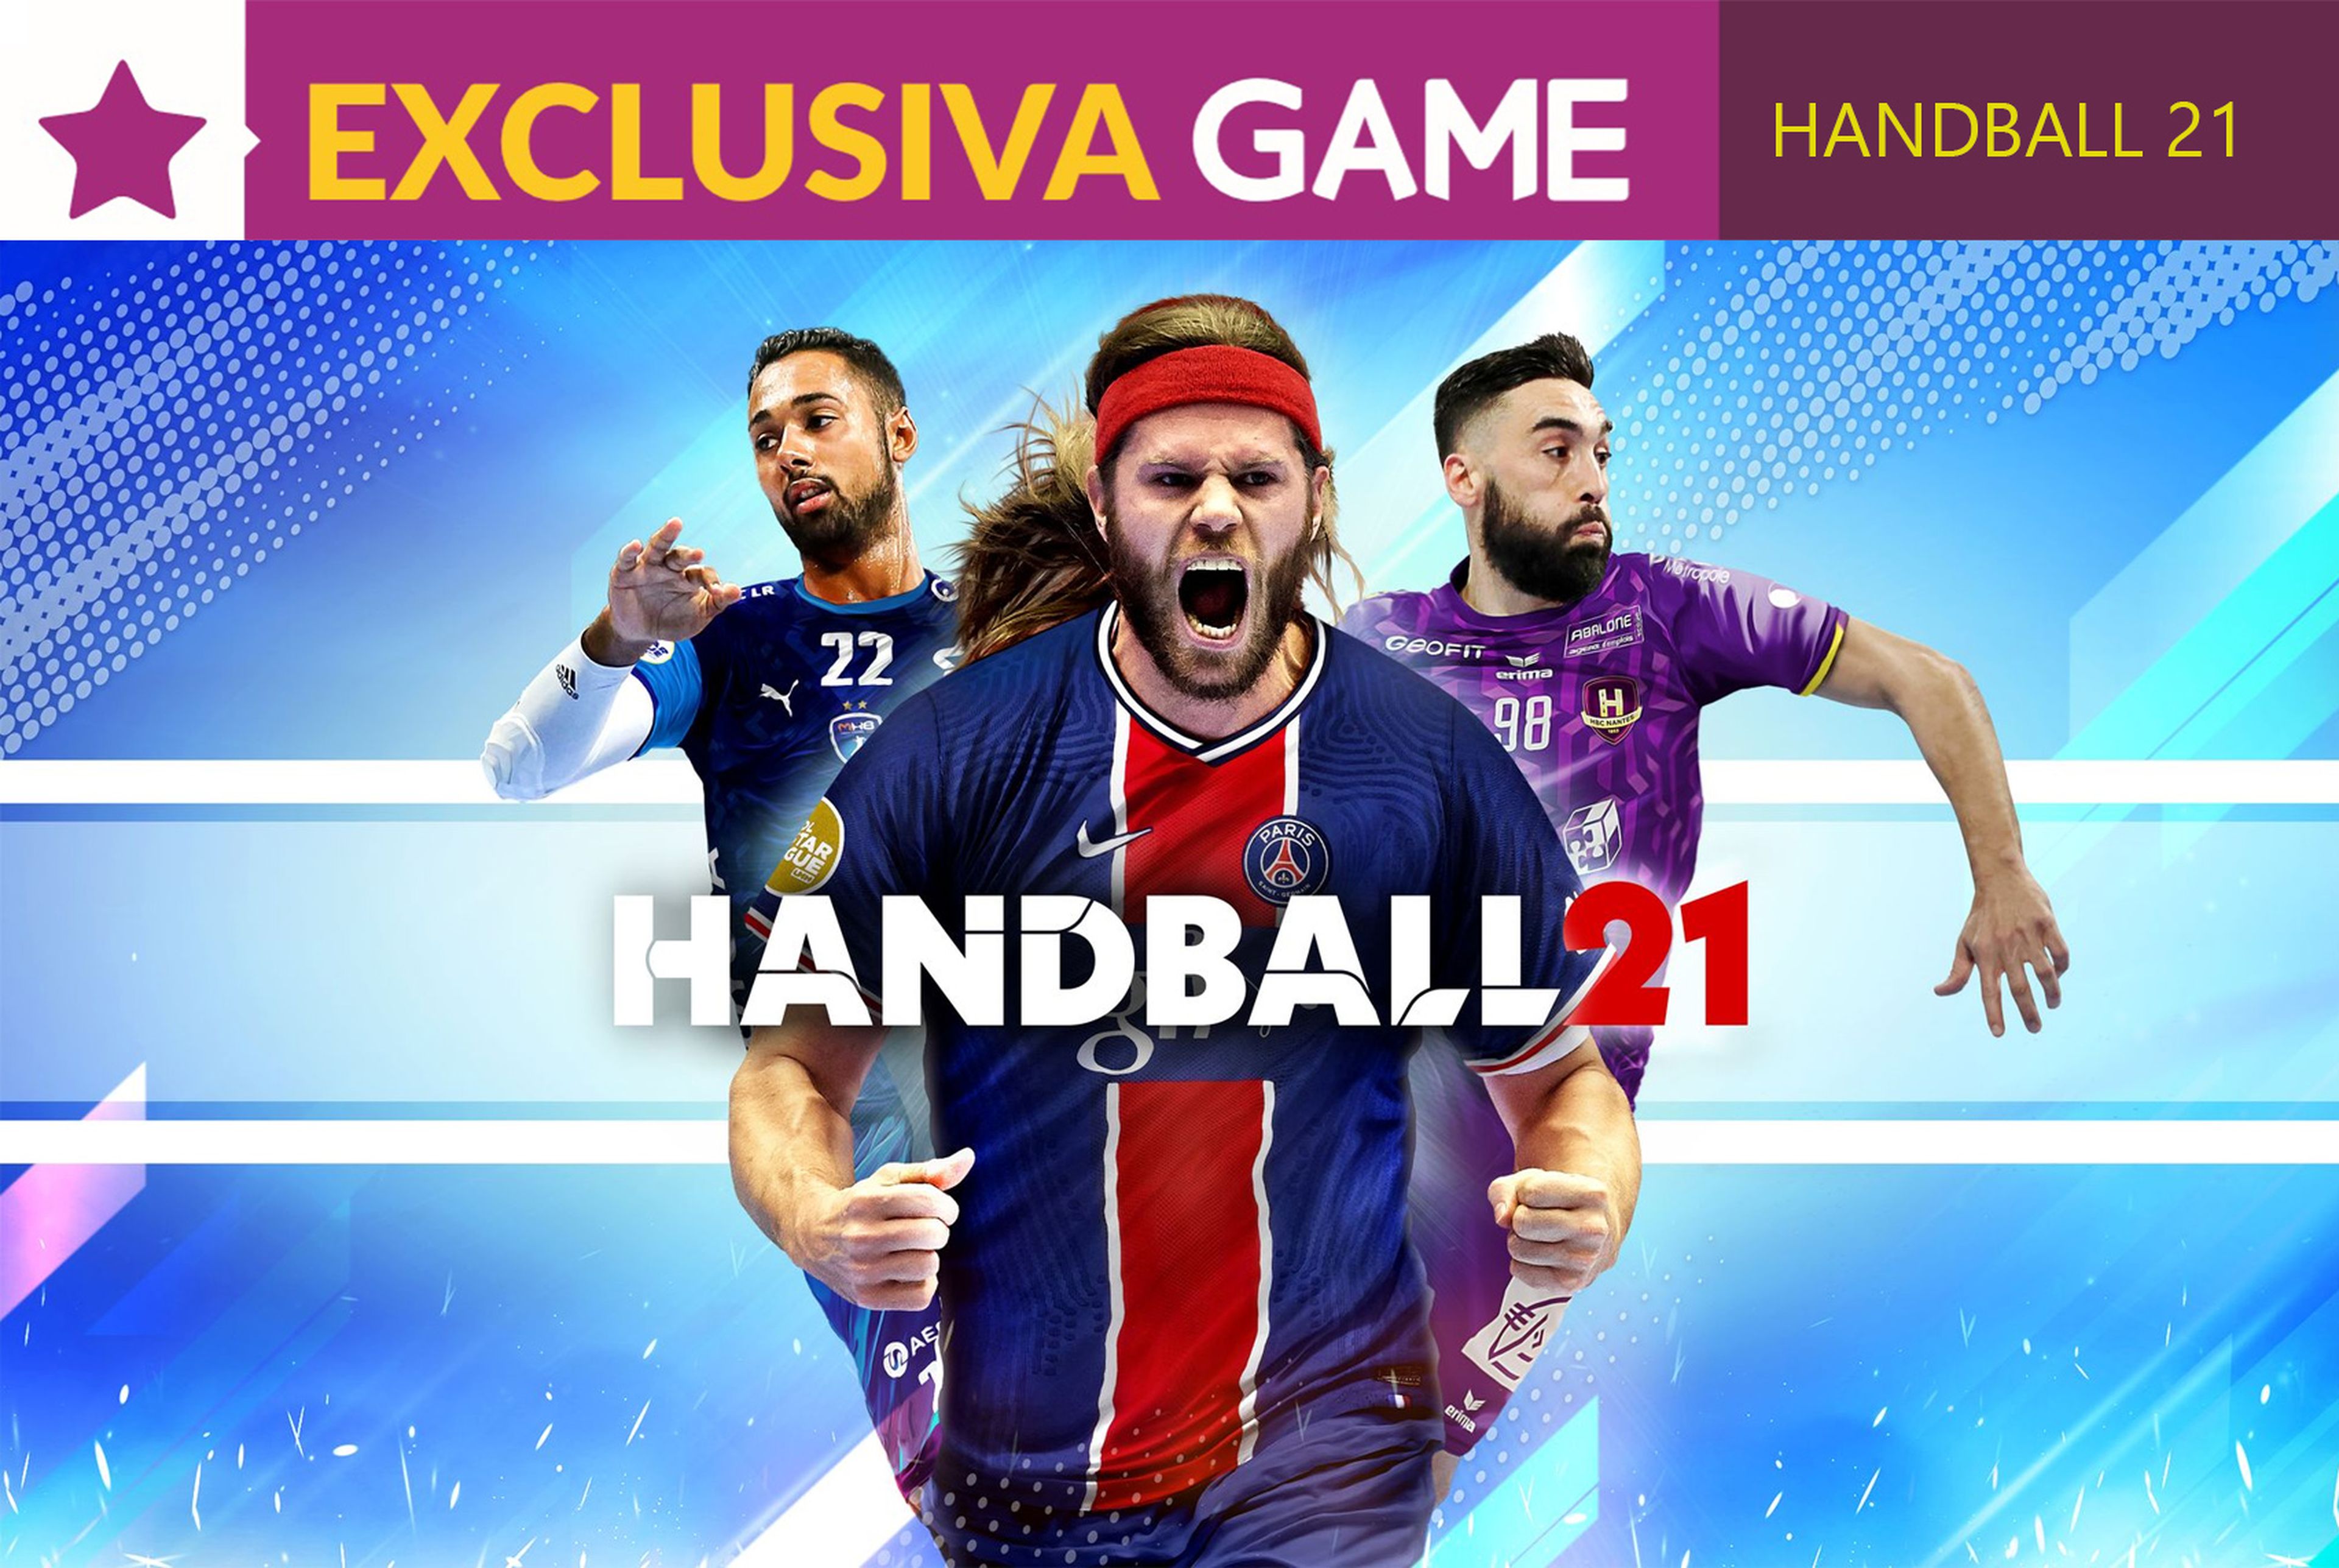 Handball 21 exclusivo GAME